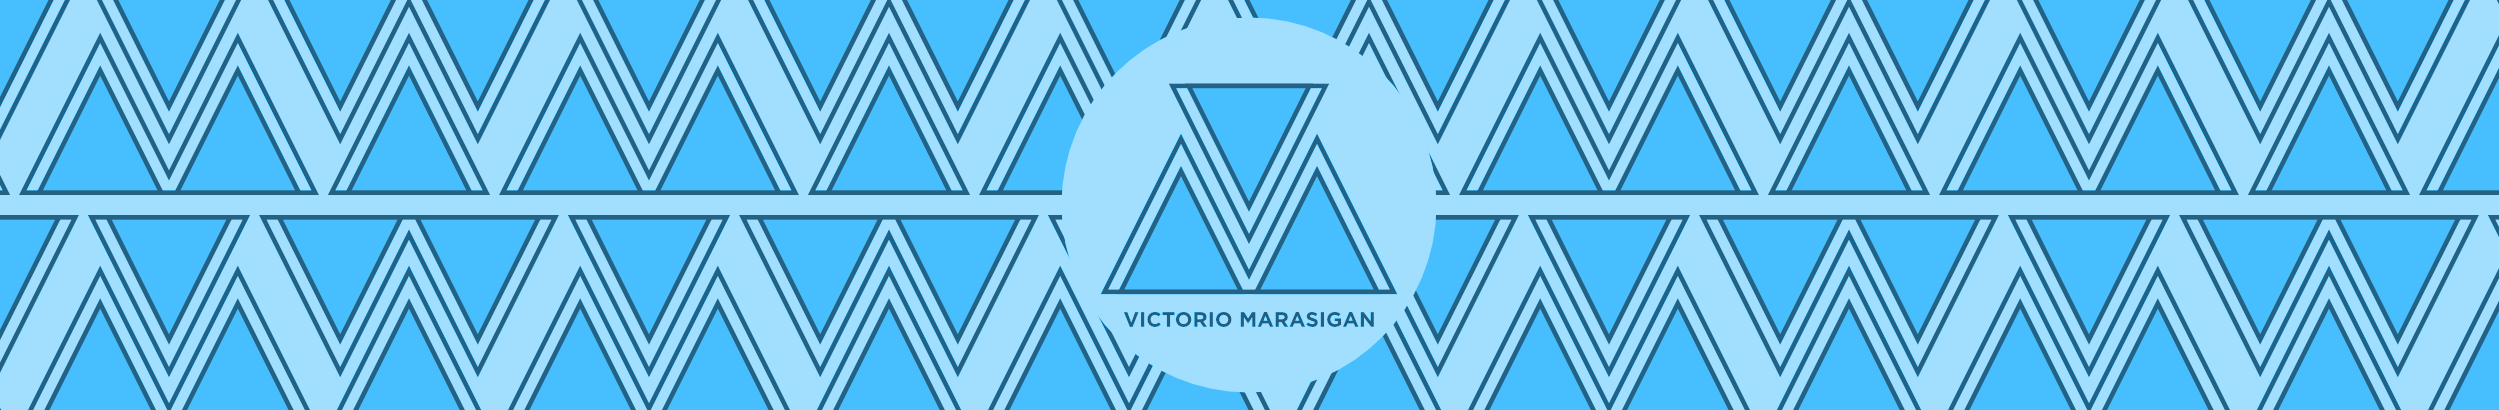 Victorio Marasigan's profile banner